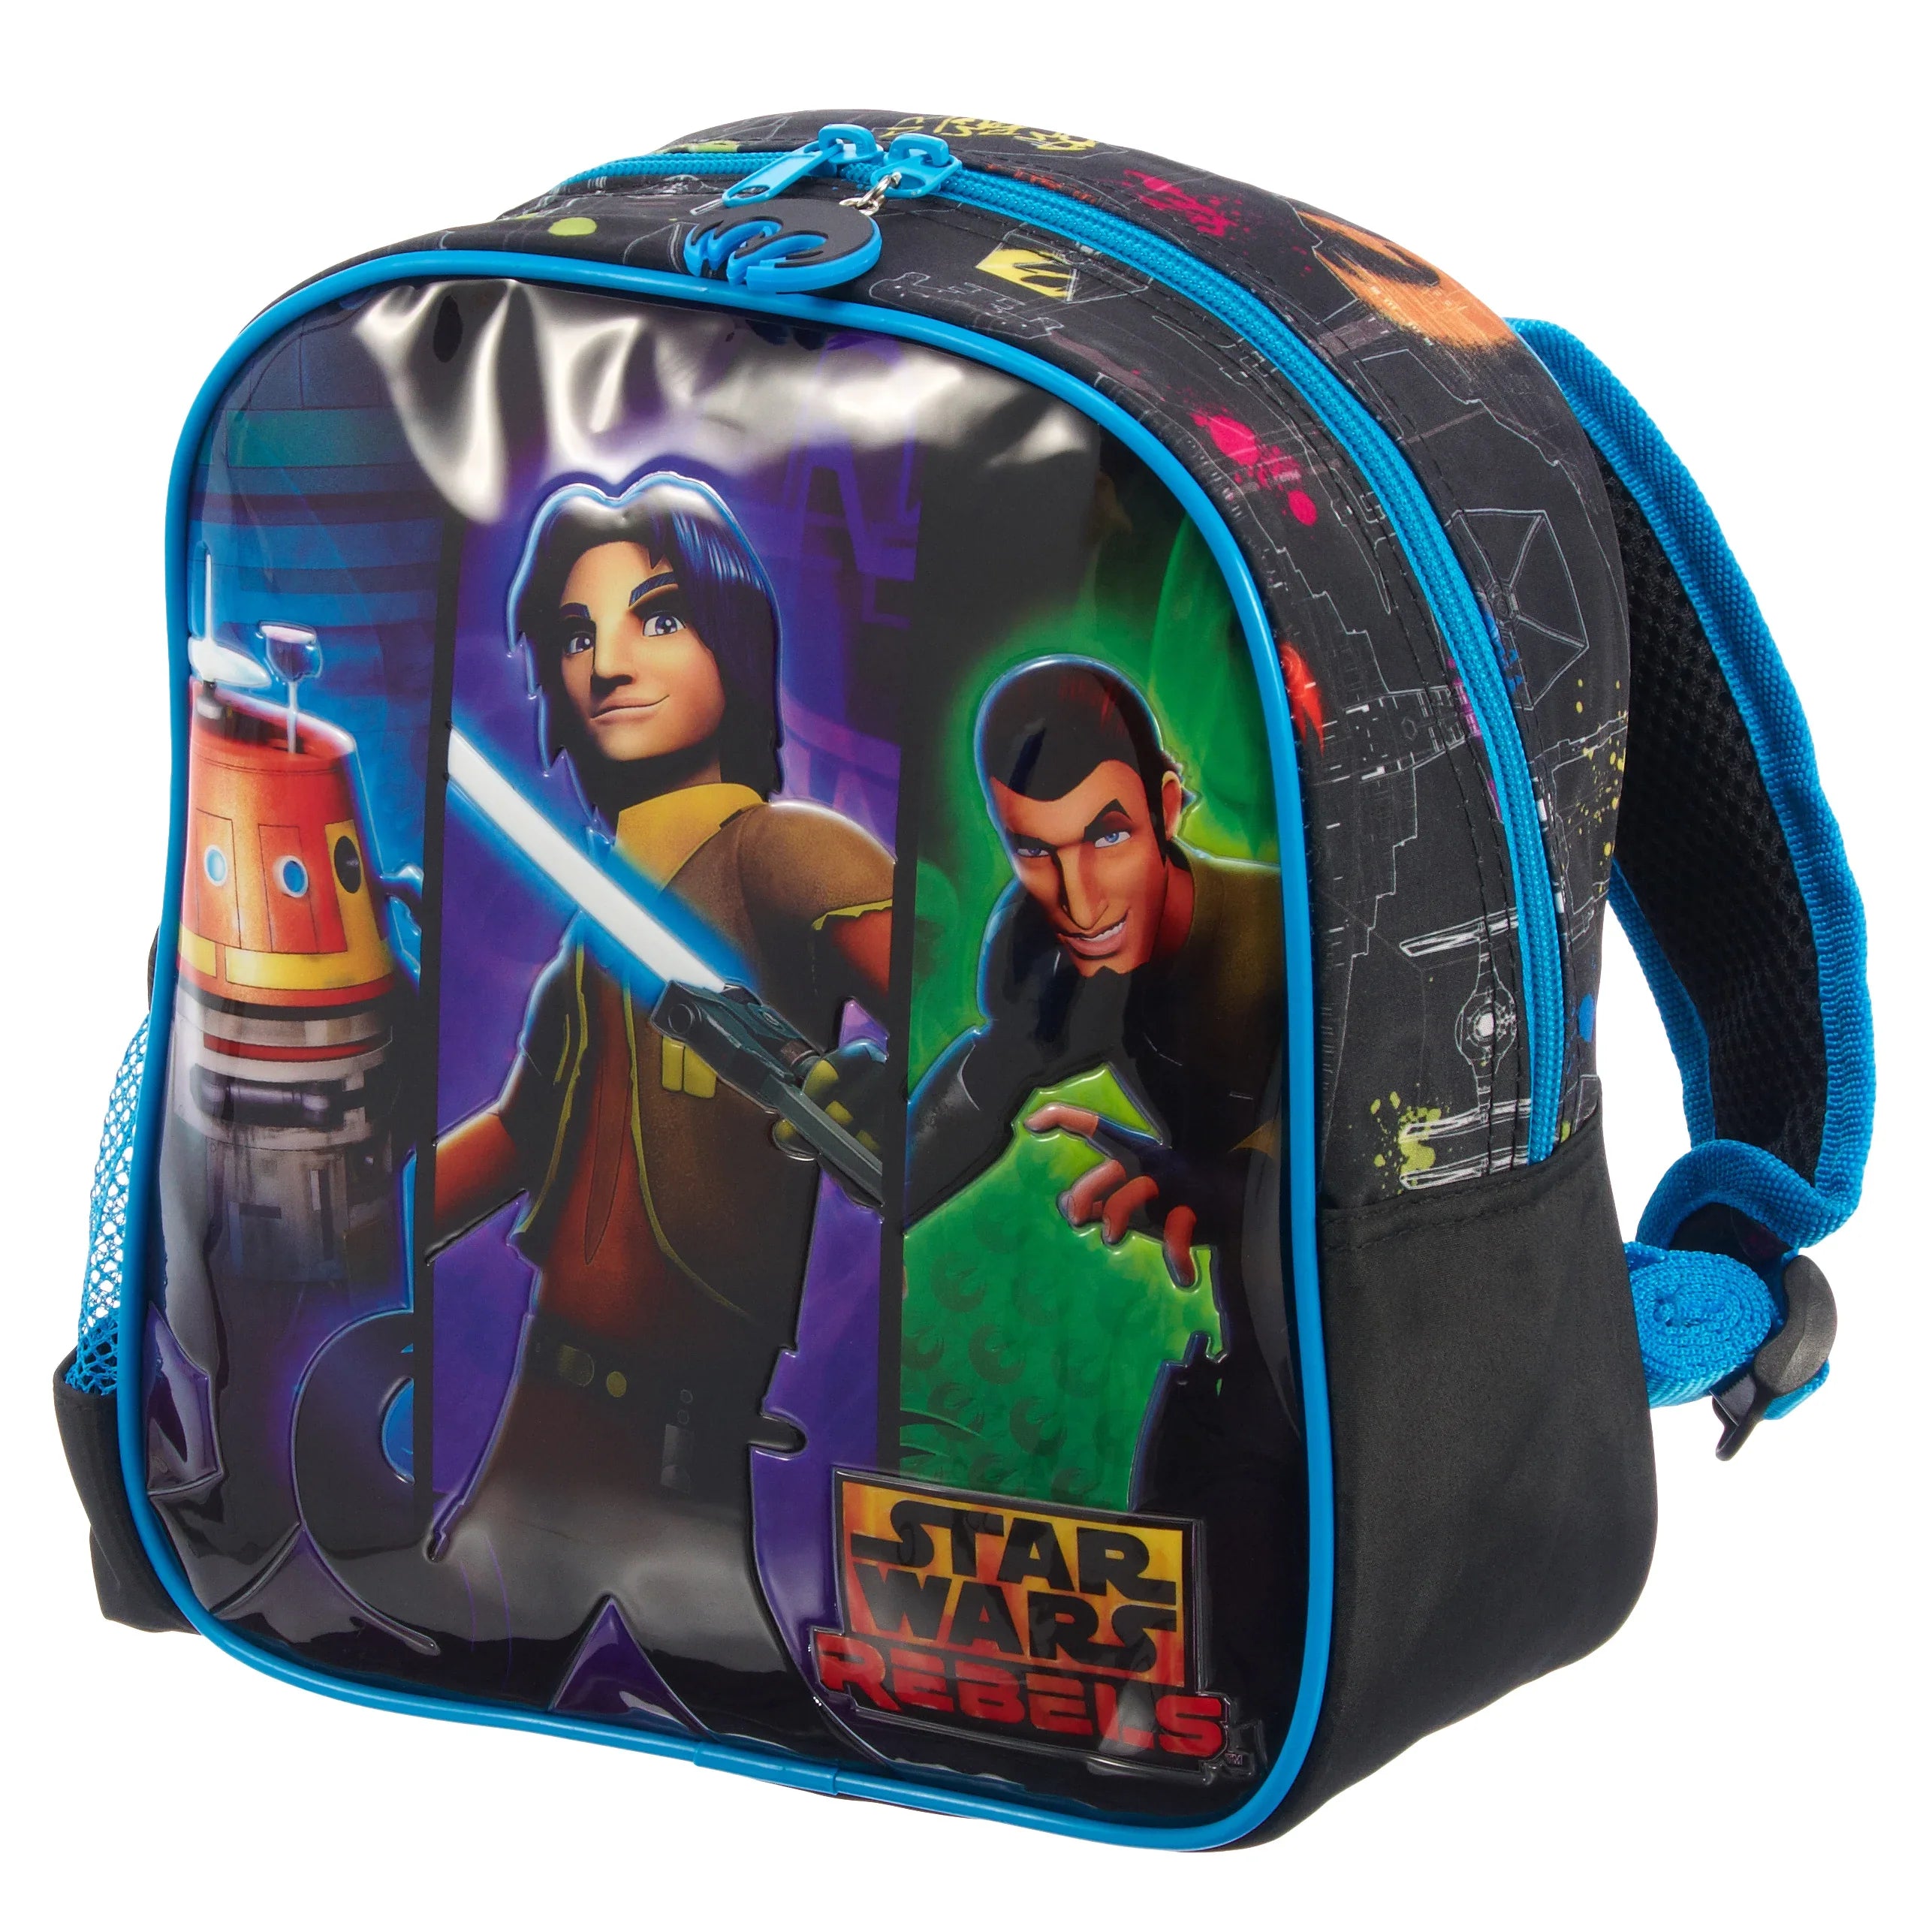 Disney Star Wars Rebels backpack 25 cm - colorful